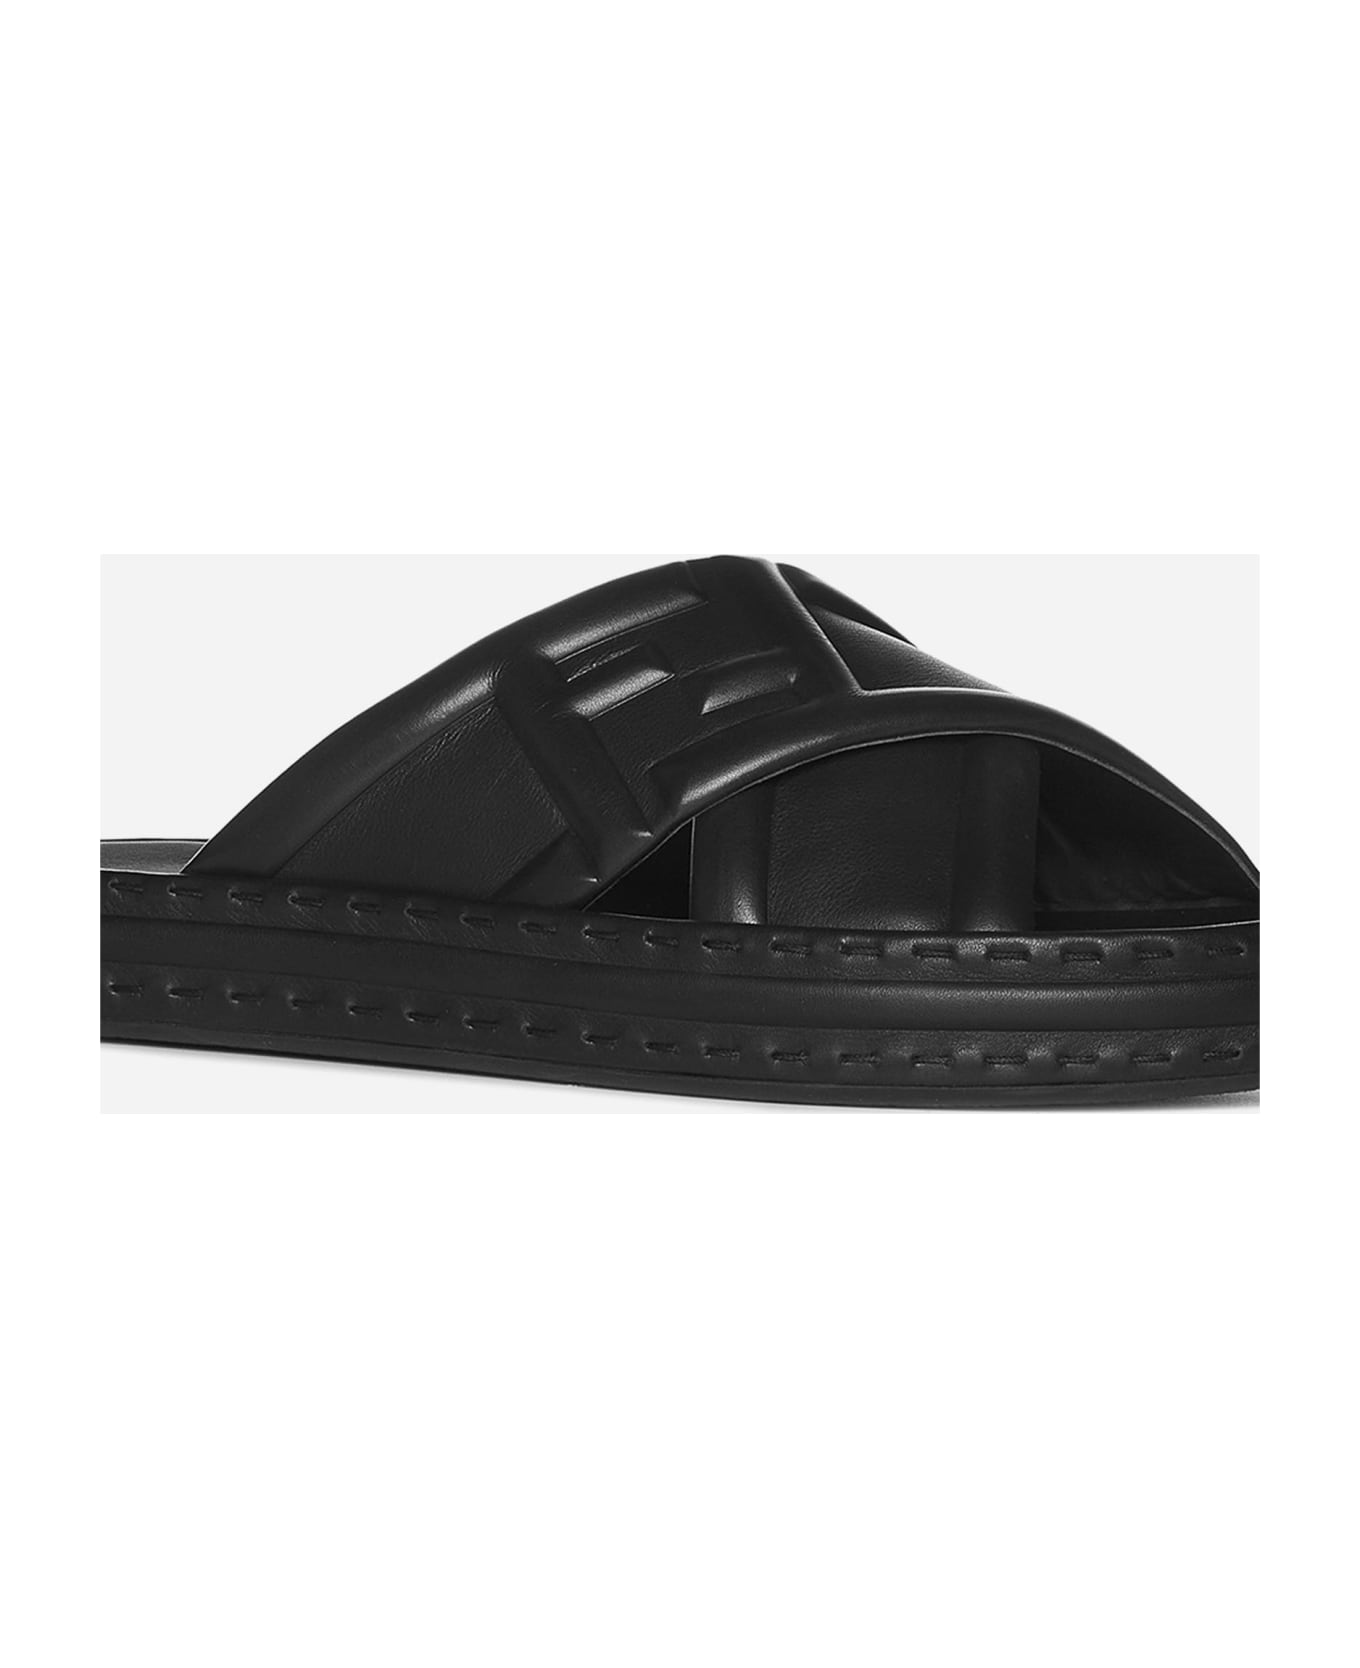 Fendi Ff Nappa Leather Sandals - BLACK